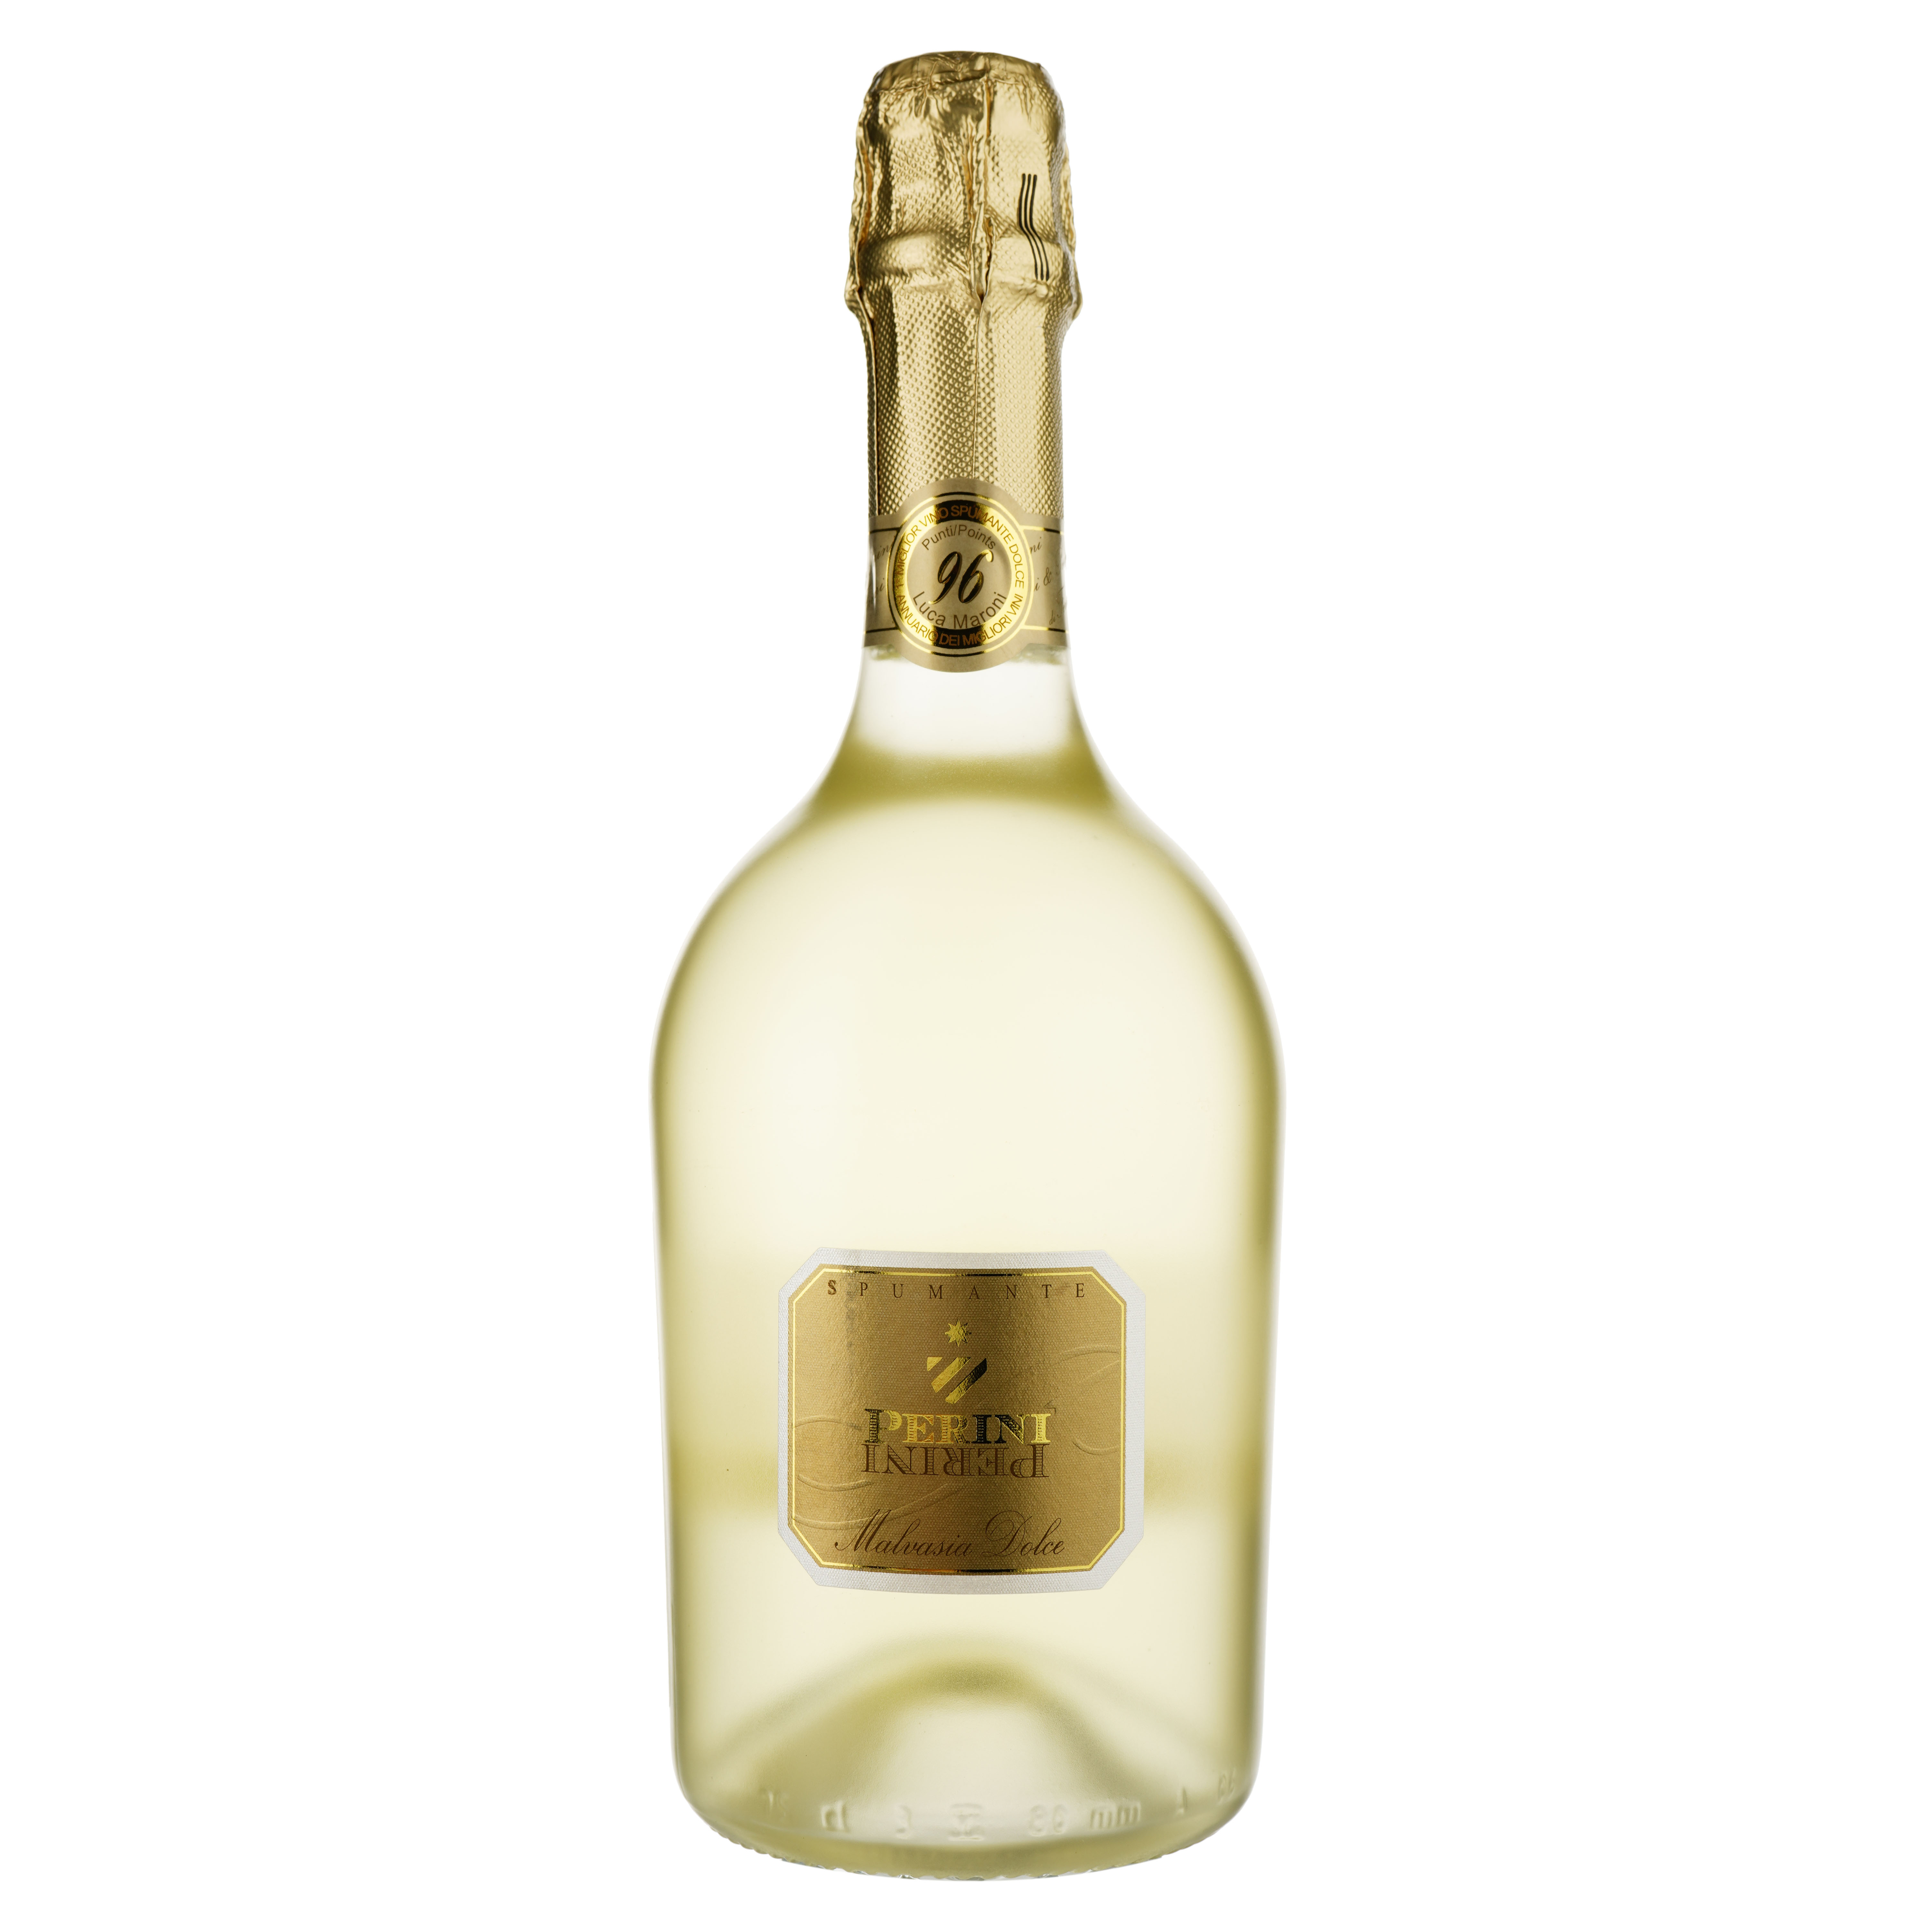 Игристое вино Perini&Perini Spumante Malvasia dolce, белое, сладкое, 6%, 0,75 л - фото 1